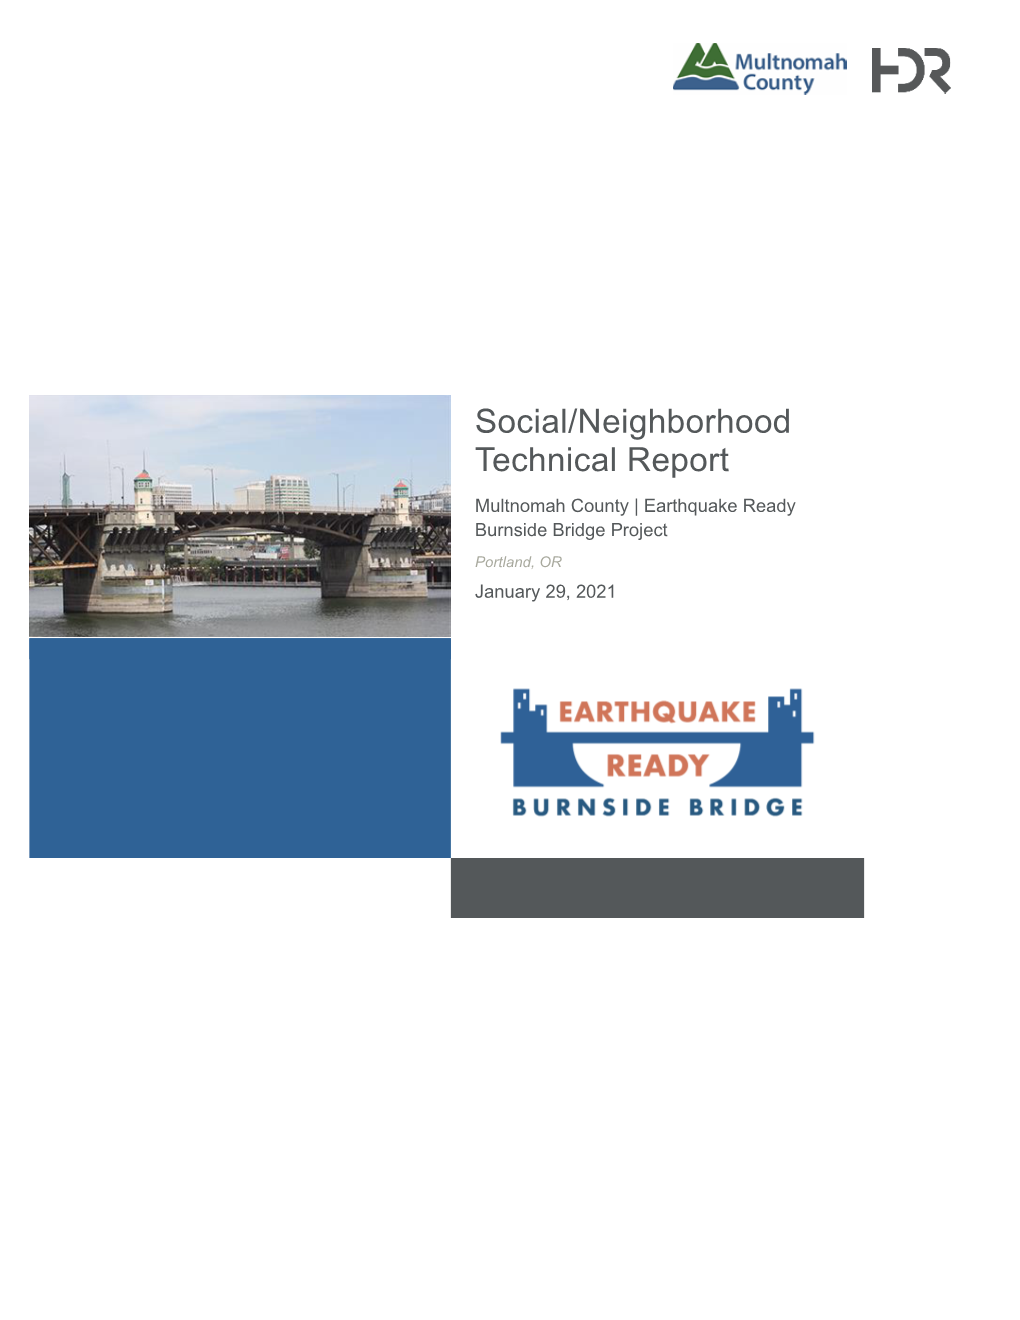 Social/Neighborhood Technical Report